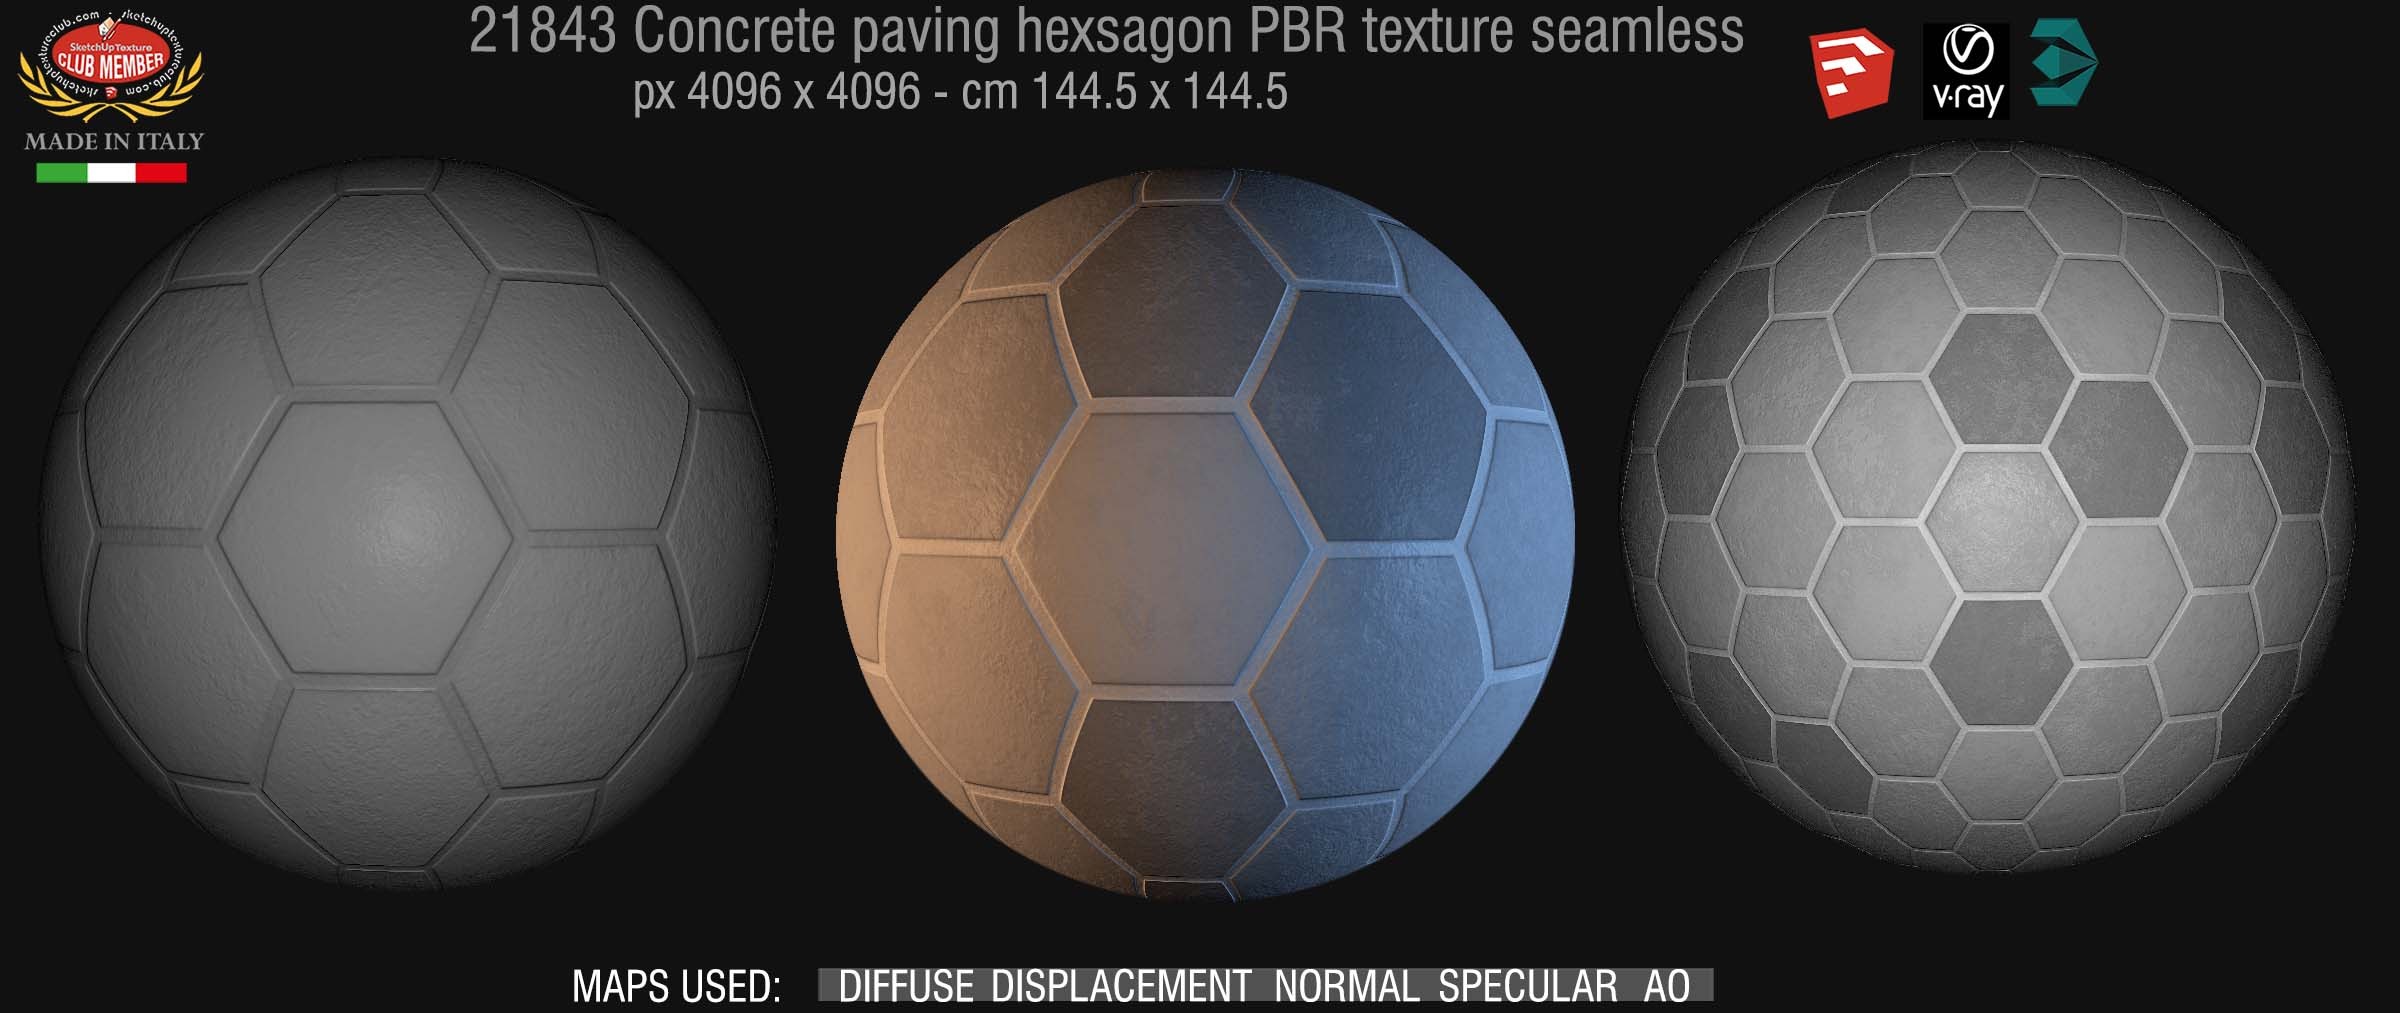 21843 Concrete paving hexagon PBR texture seamless DEMO